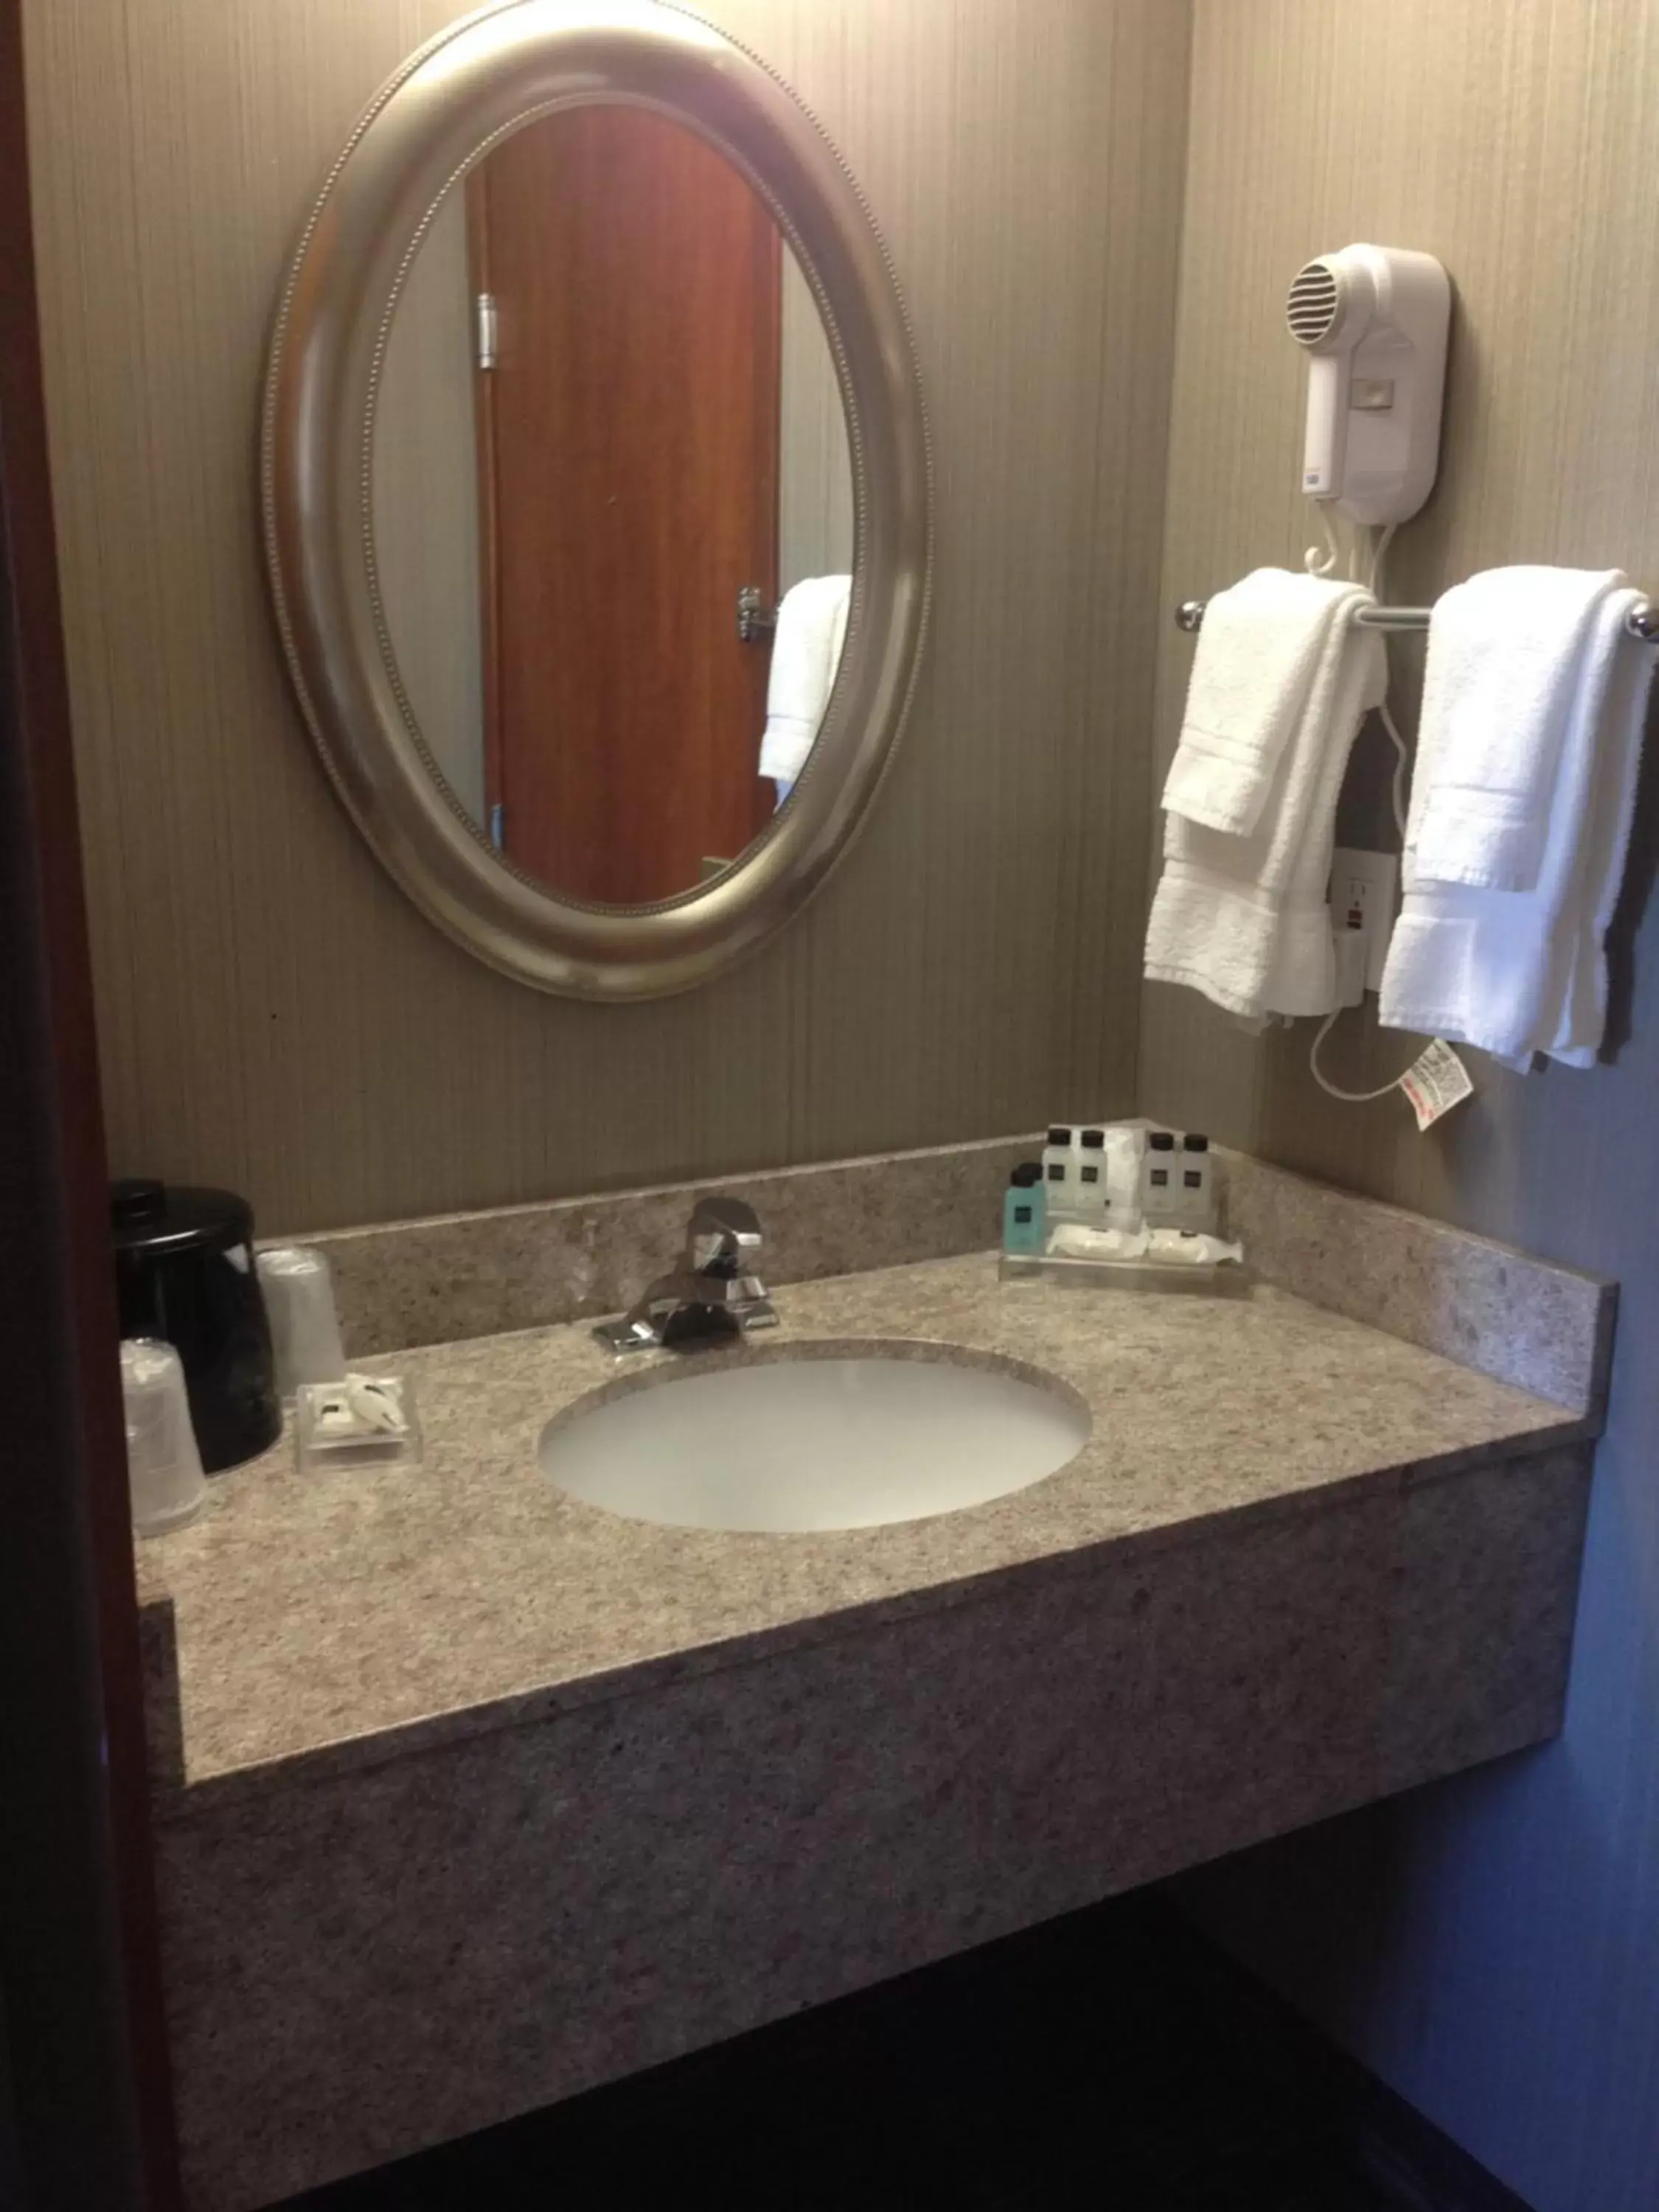 Bathroom in Country Inn & Suites, Delta Park, Portland, OR